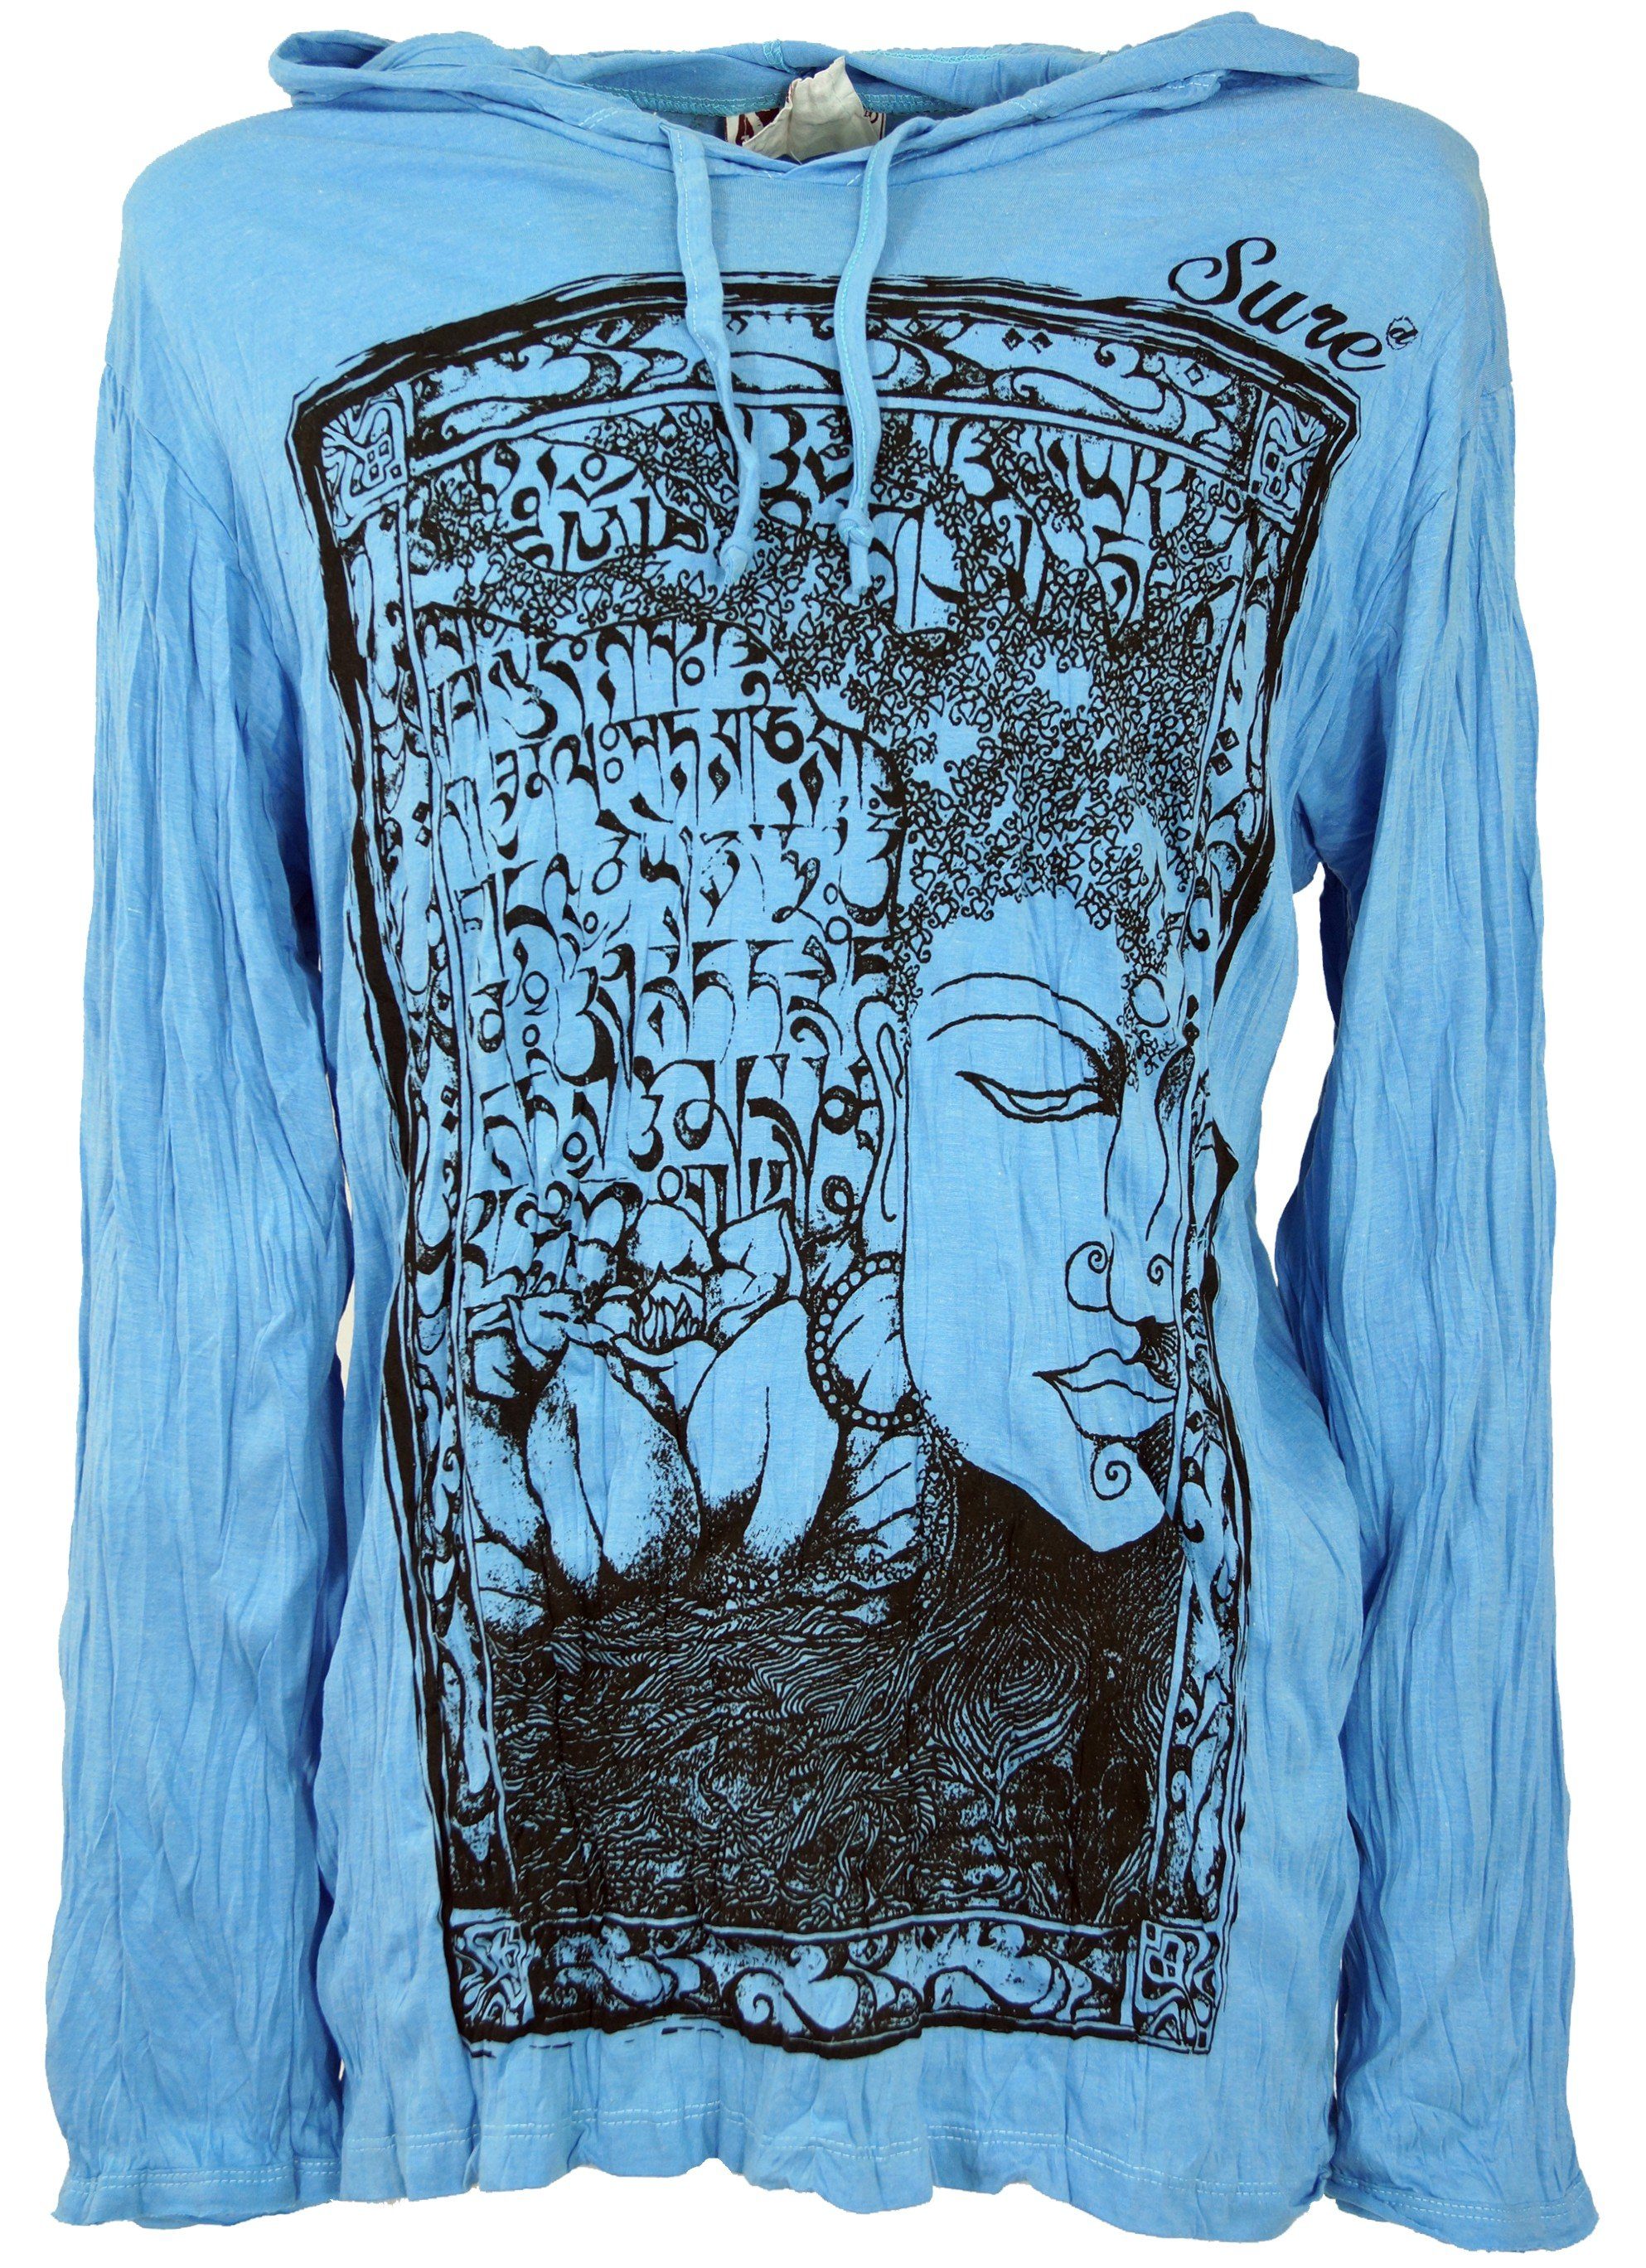 T-Shirt Mantra Langarmshirt, alternative Guru-Shop Bekleidung Buddha Goa -.. hellblau Sure Style, Kapuzenshirt Festival,